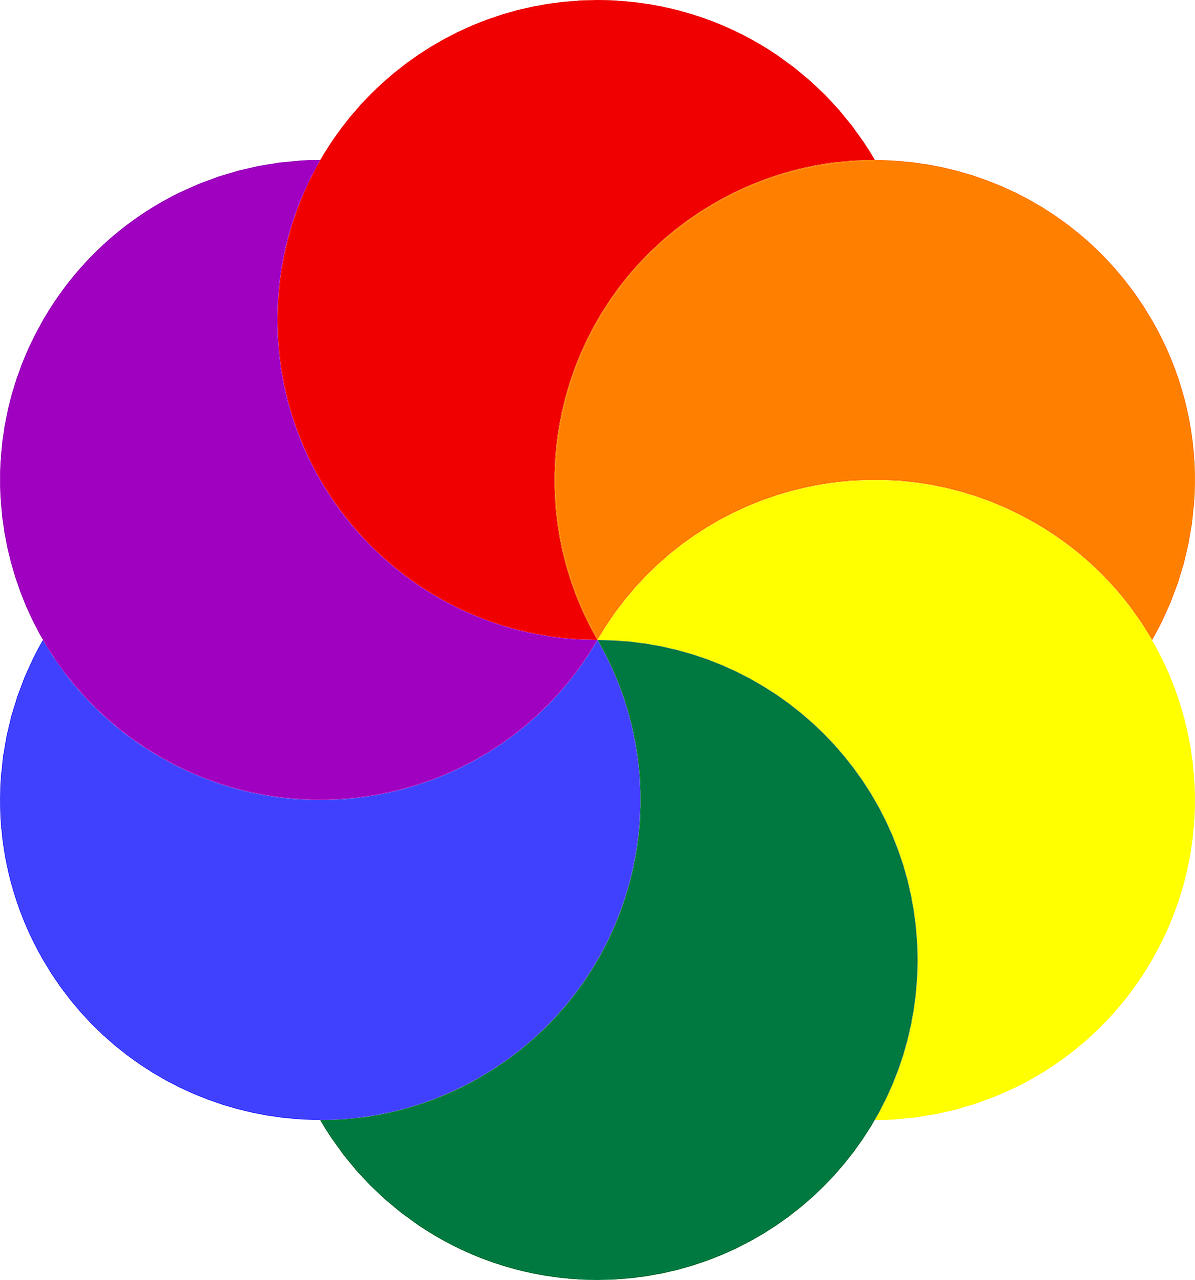 colors rainbow colors circle free photo